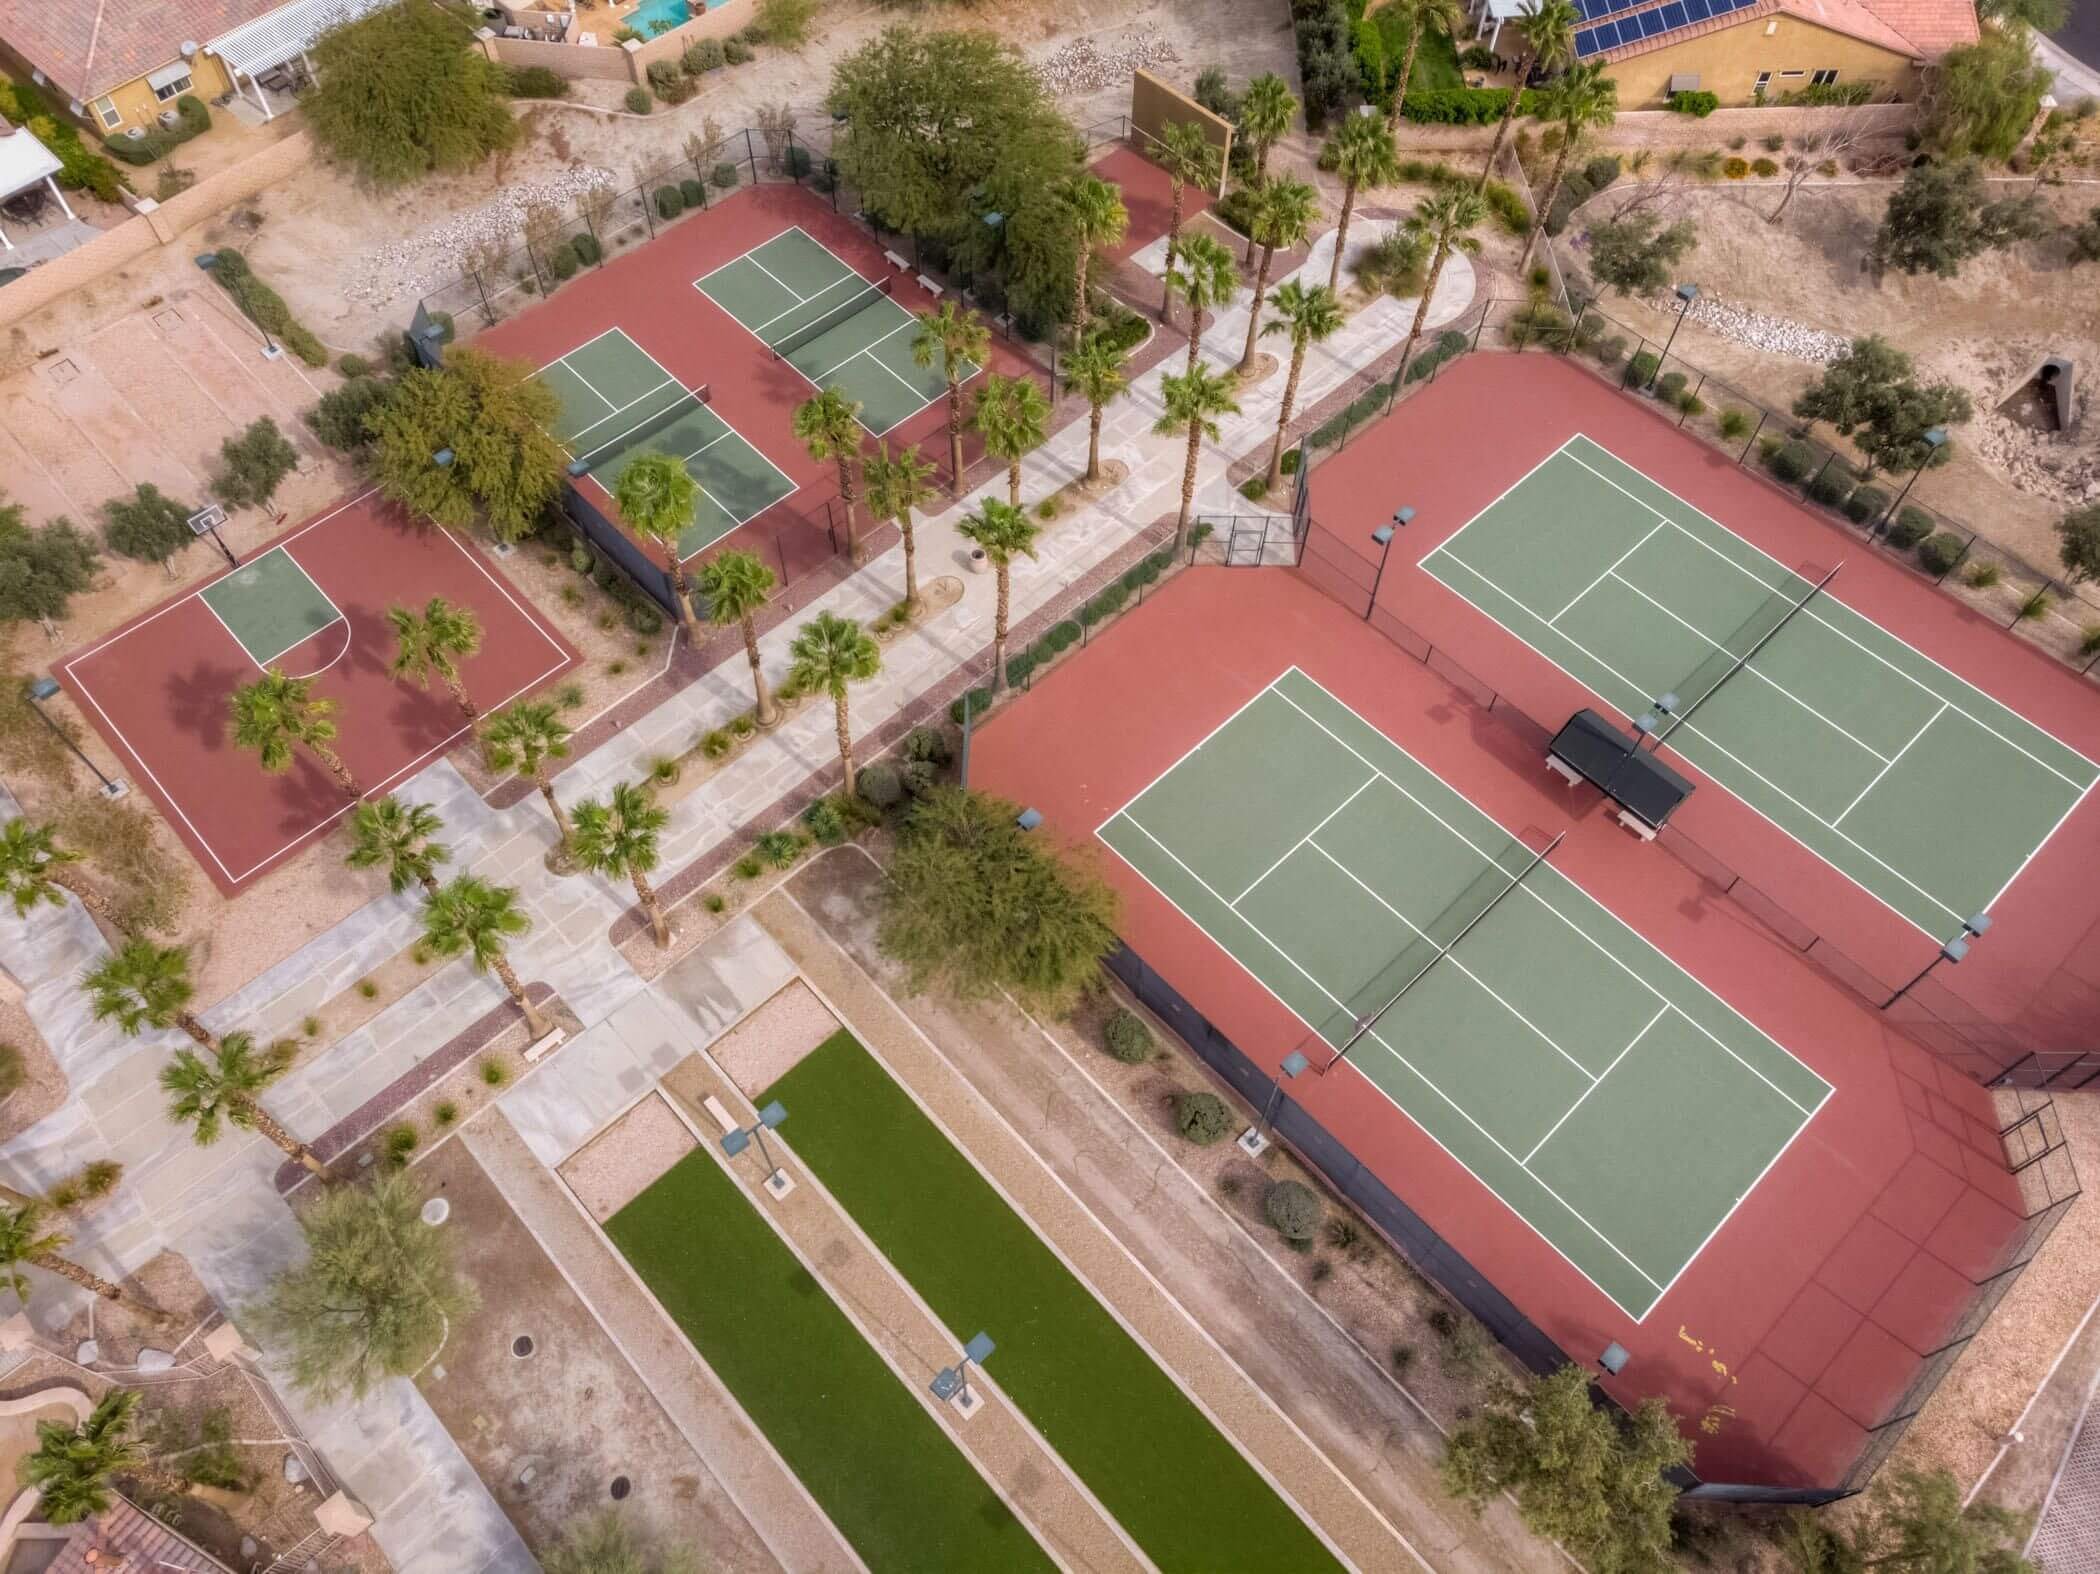 Four Seasons Tennis Courts